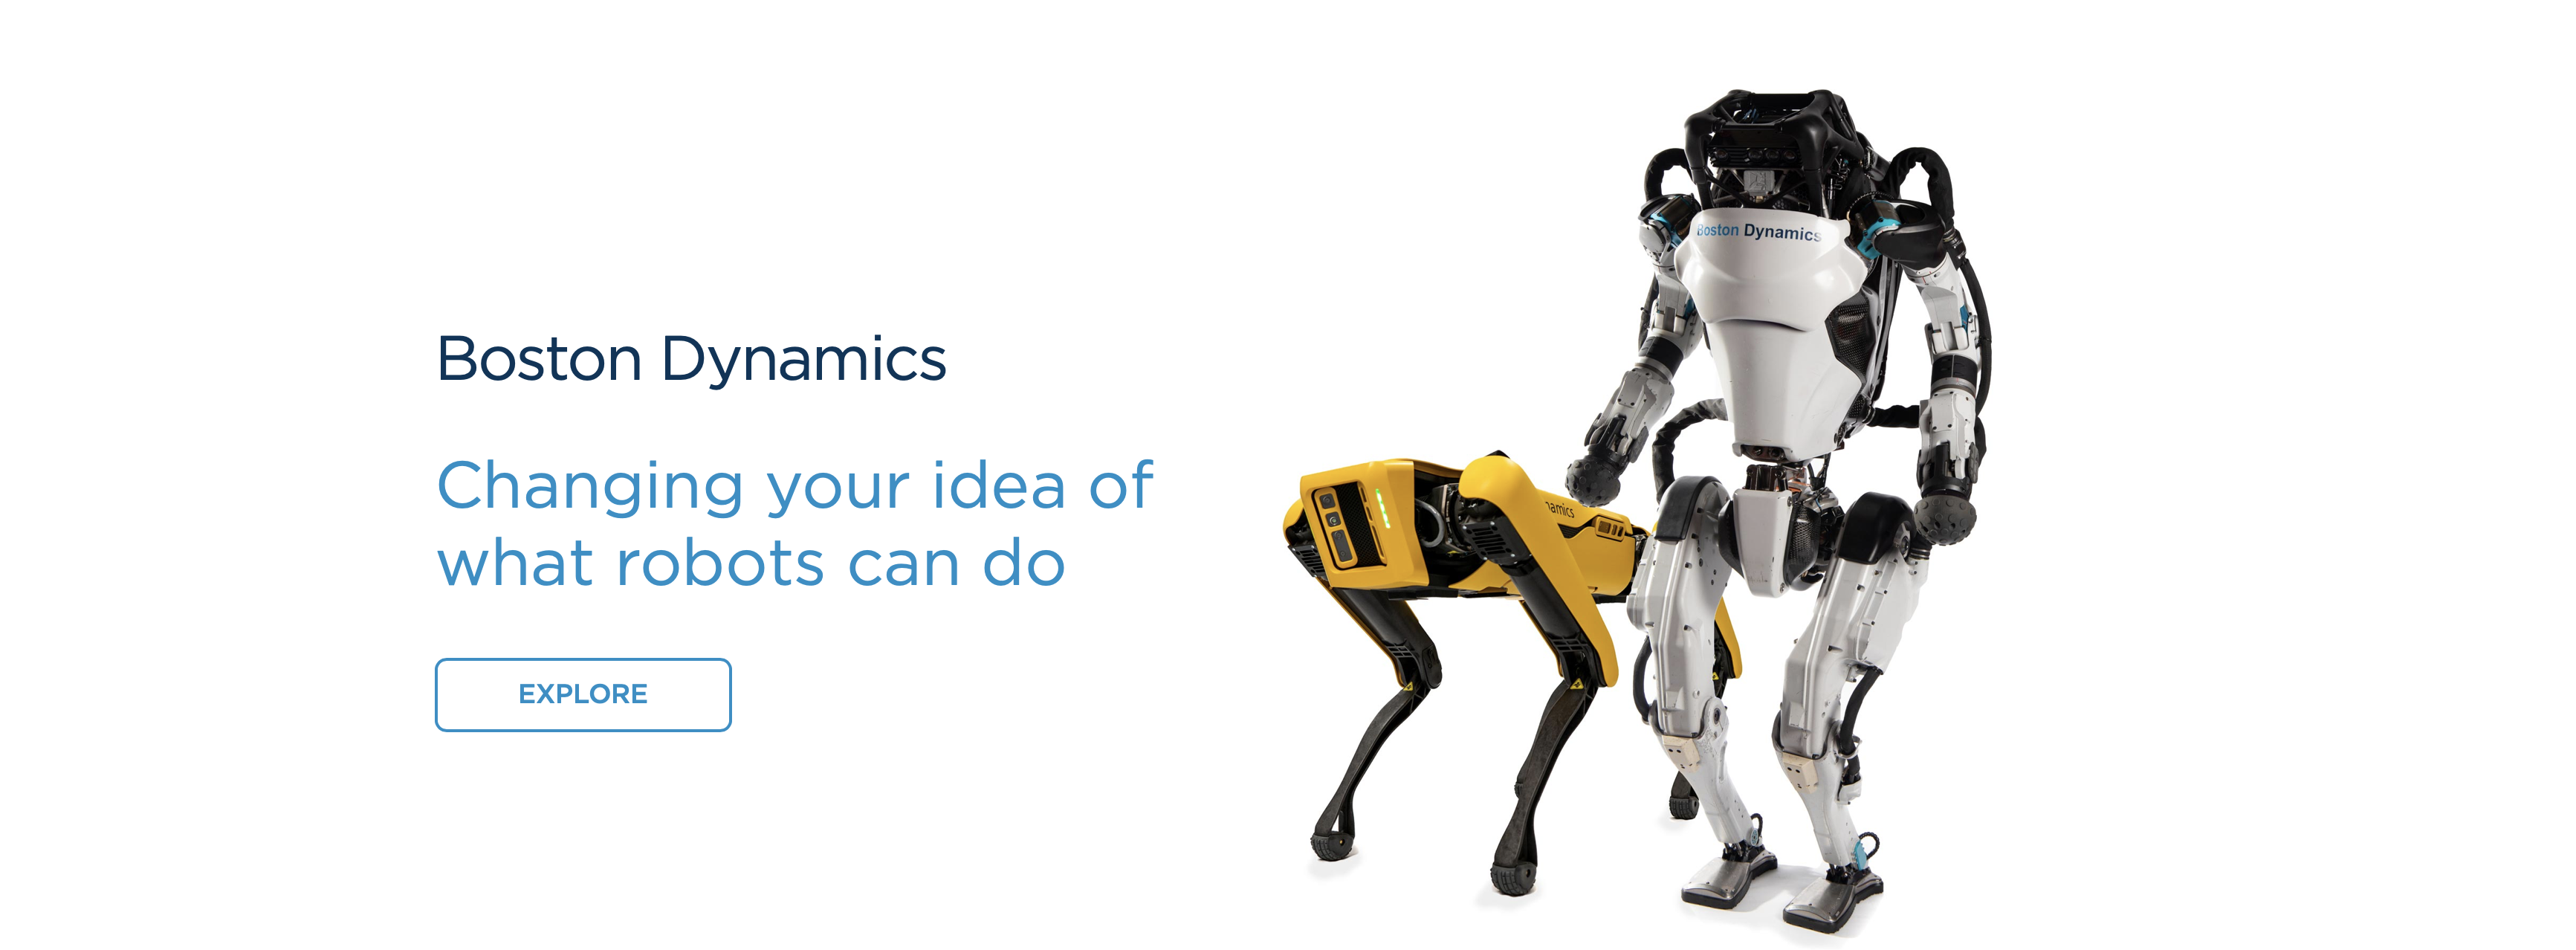 utilgivelig Korridor arv B2B brand distinctiveness: Boston Dynamics' Dancing Robots - brandgym